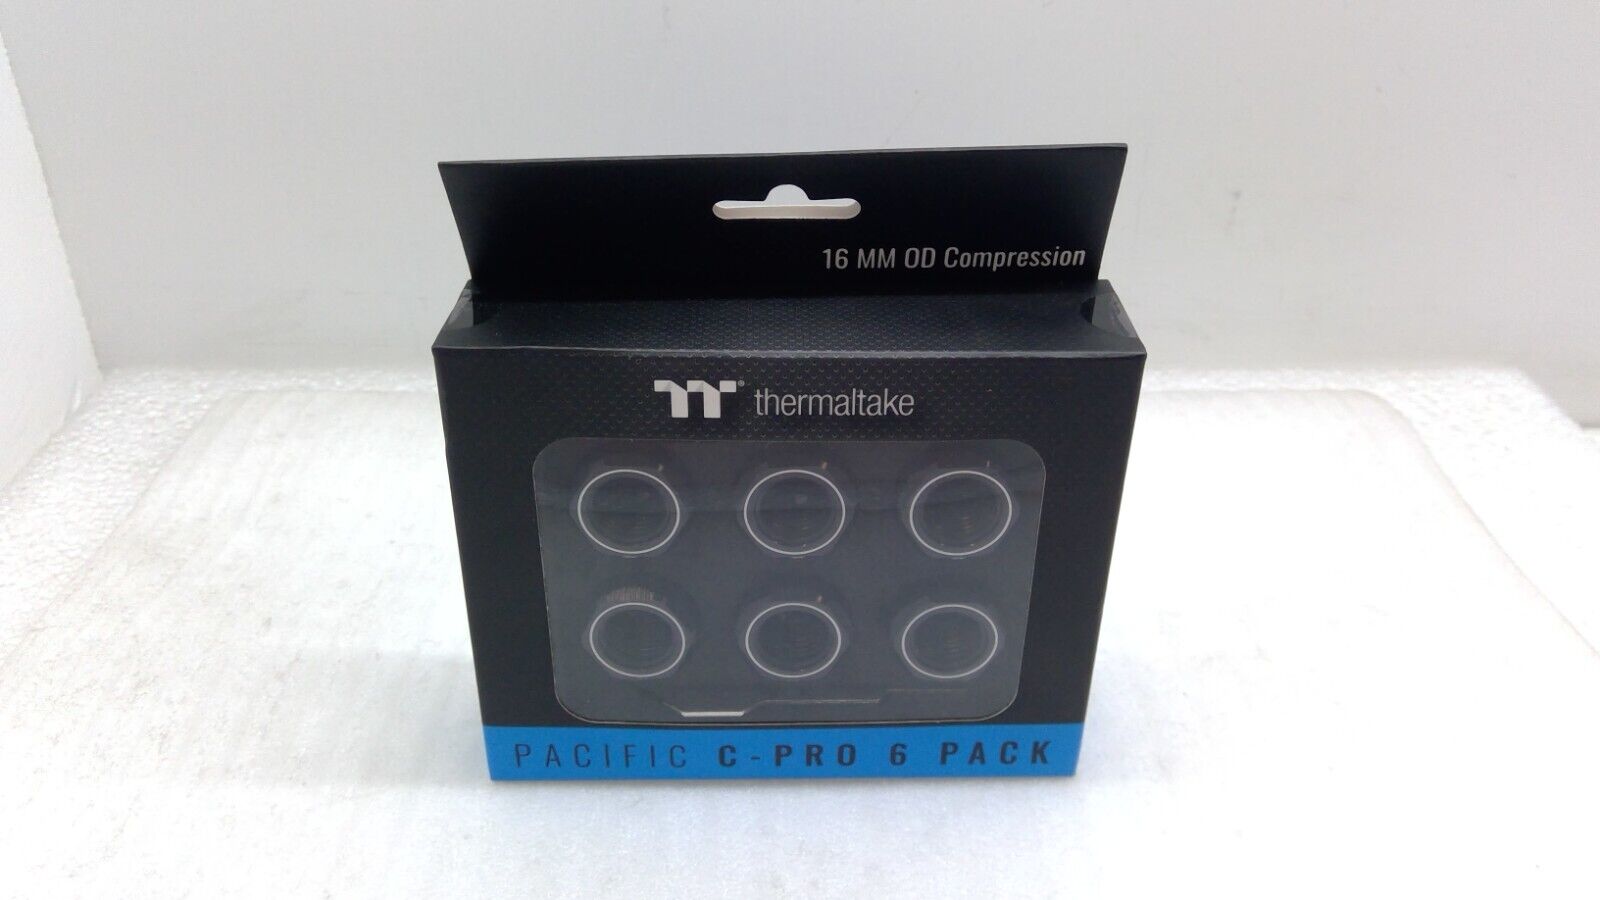 Thermaltake CL-W214-CU00BL-B Pacific C-PRO 6 pack 16mm OD Compression Black